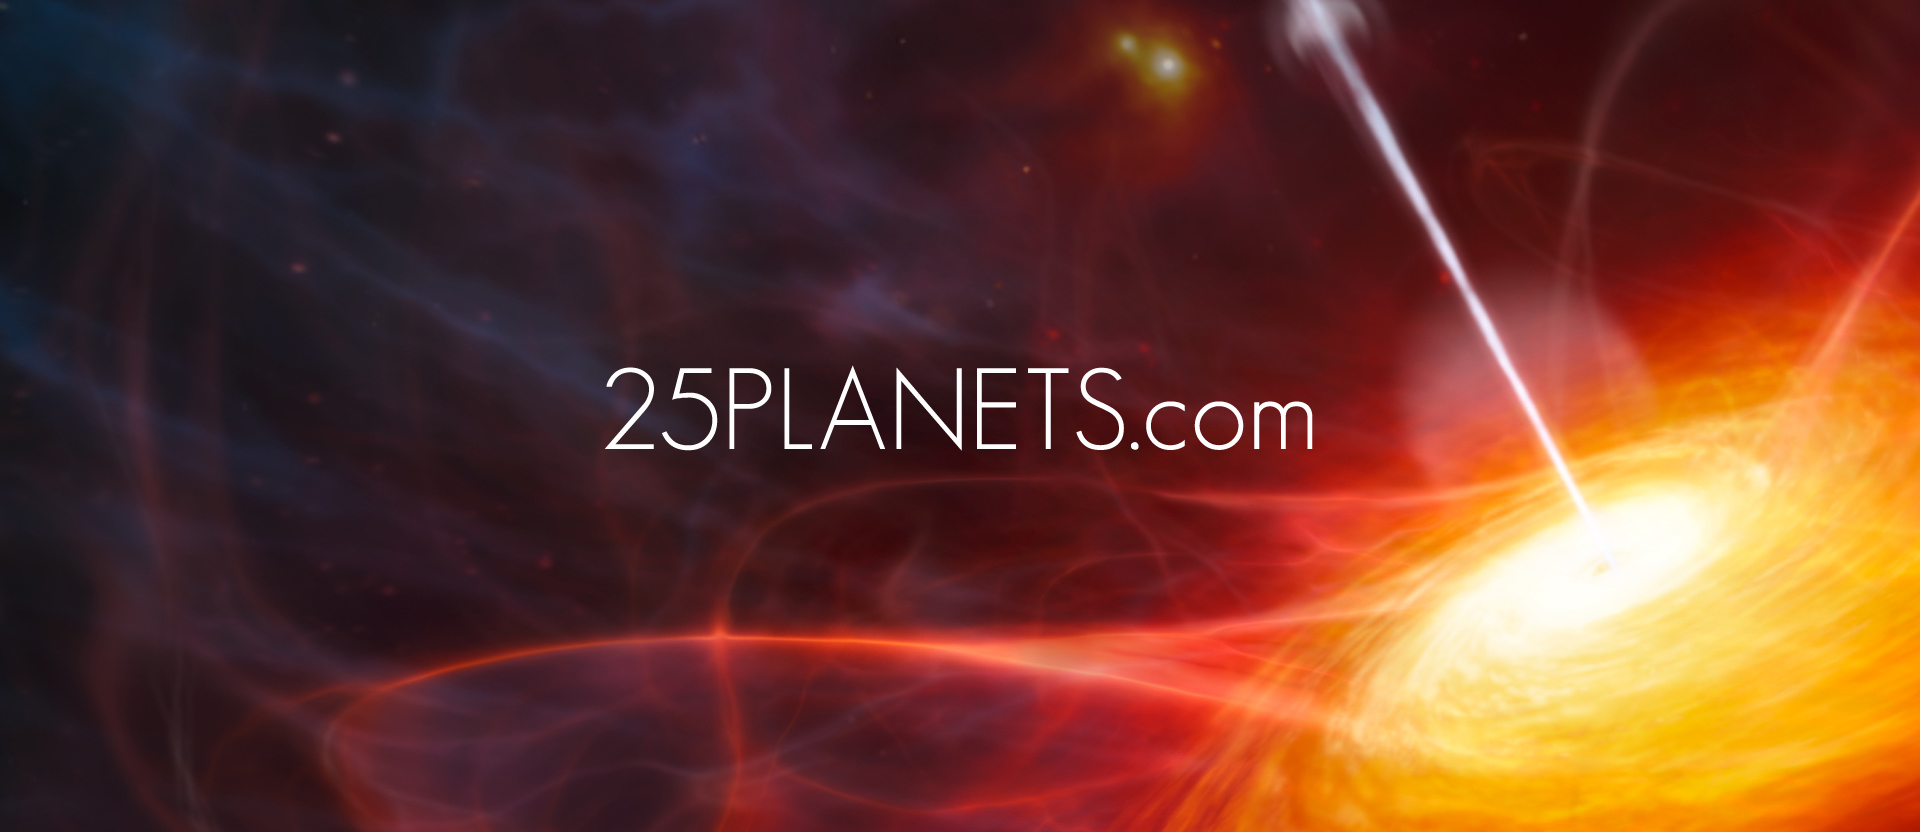 25planets